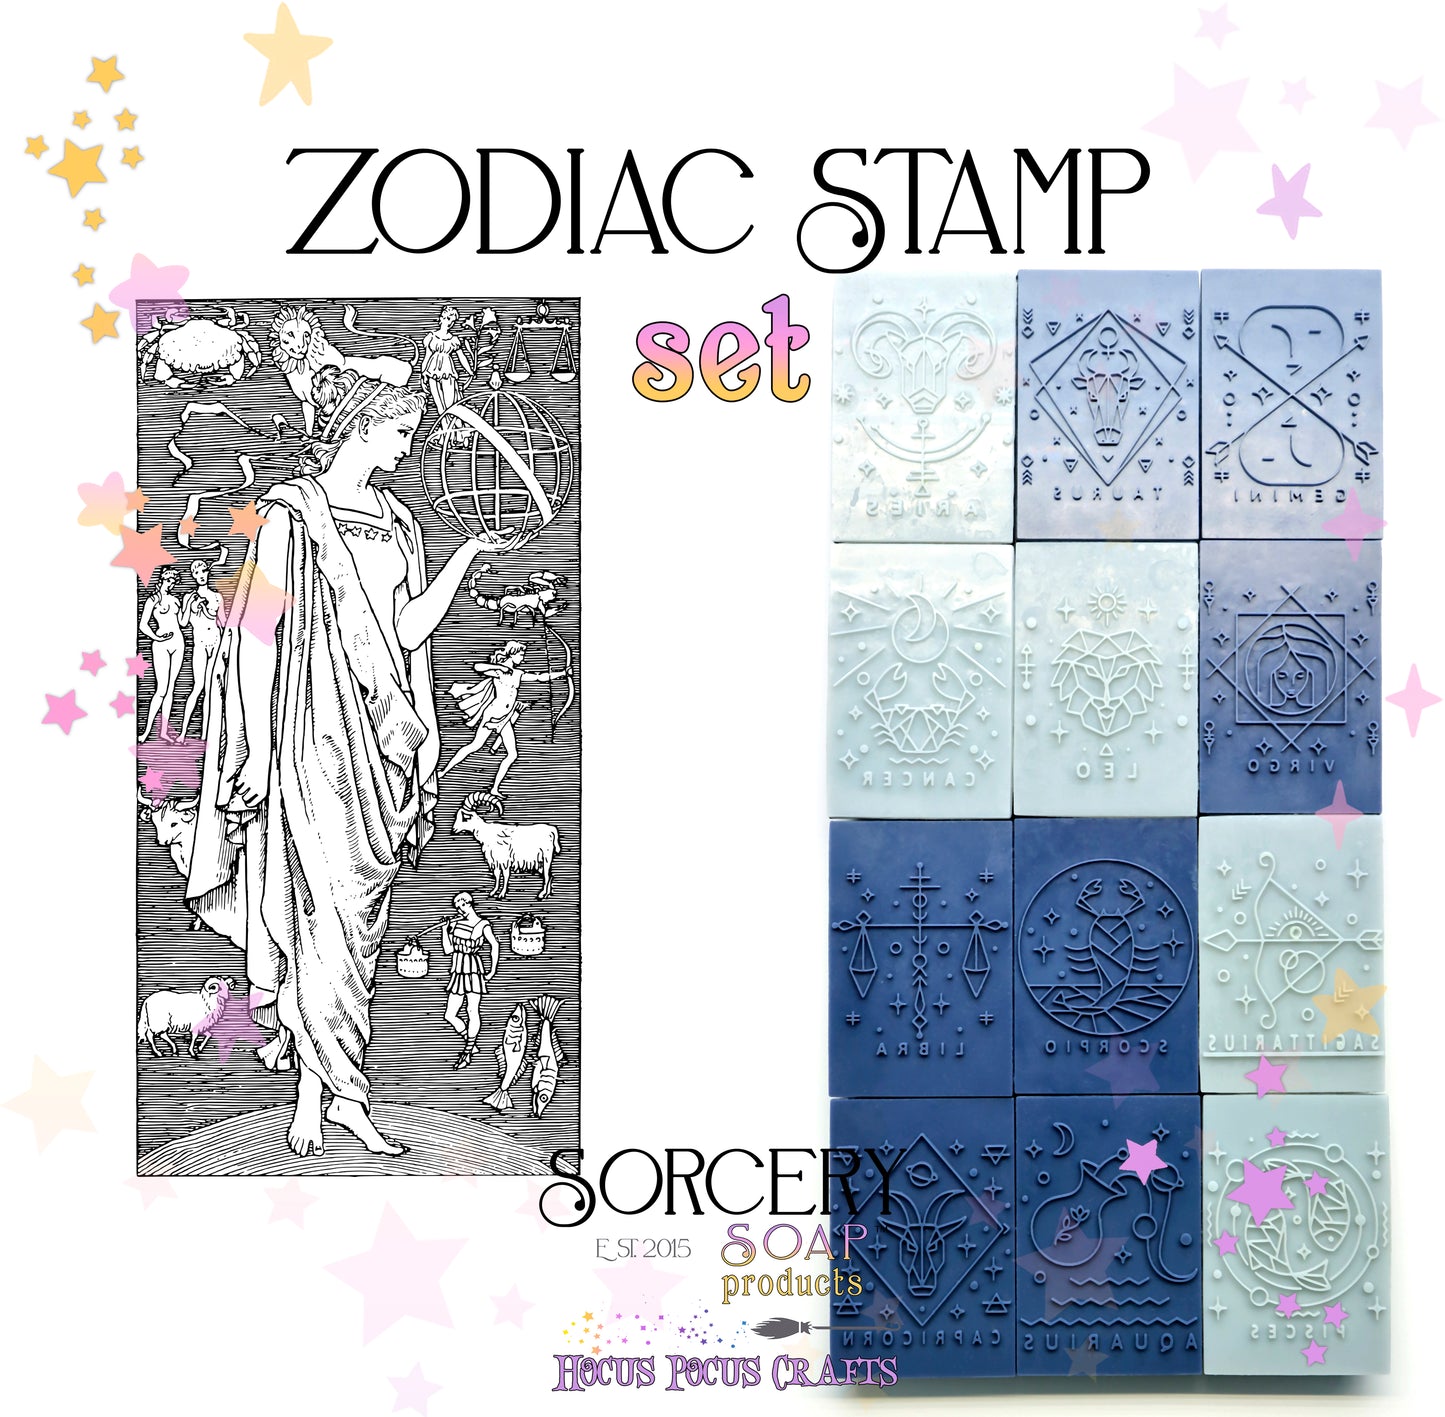 Zodiac Soap Stamps